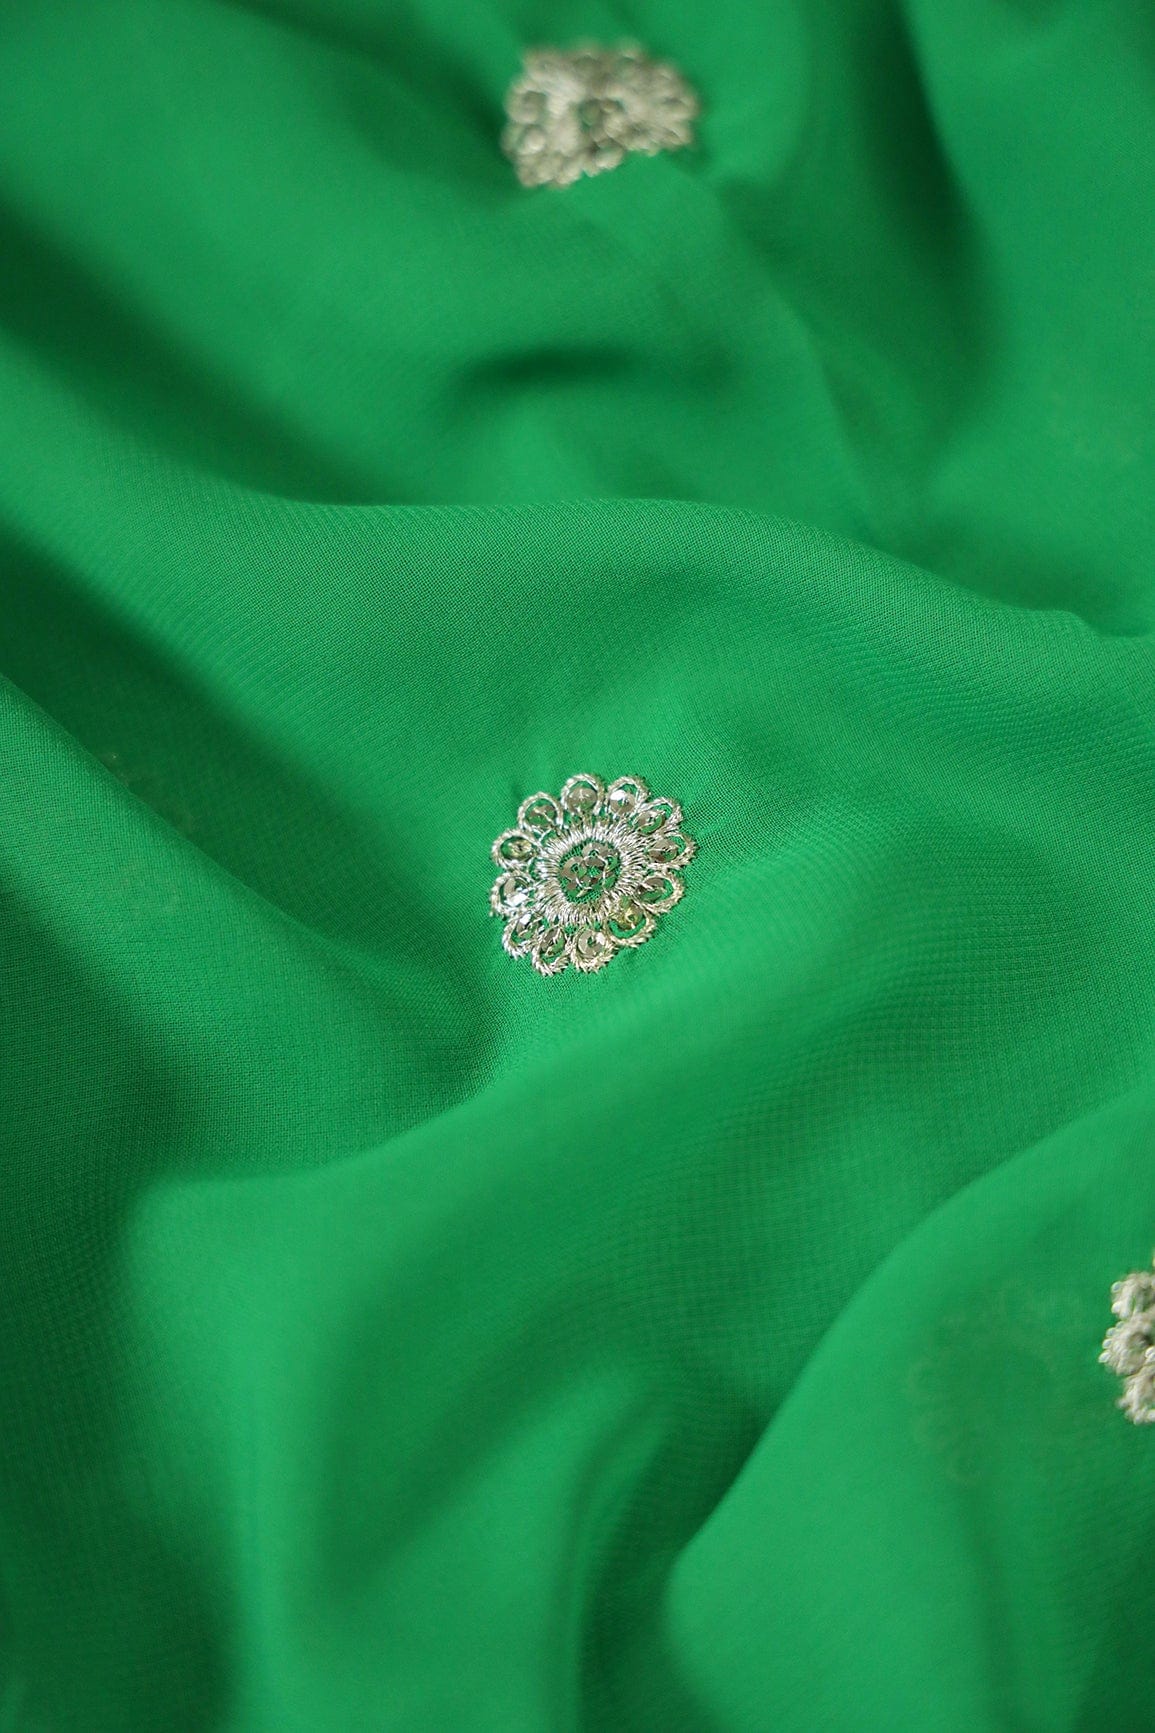 Big Width''56'' Silver Zari Leafy Embroidery Work On Green Georgette Fabric With Border - doeraa